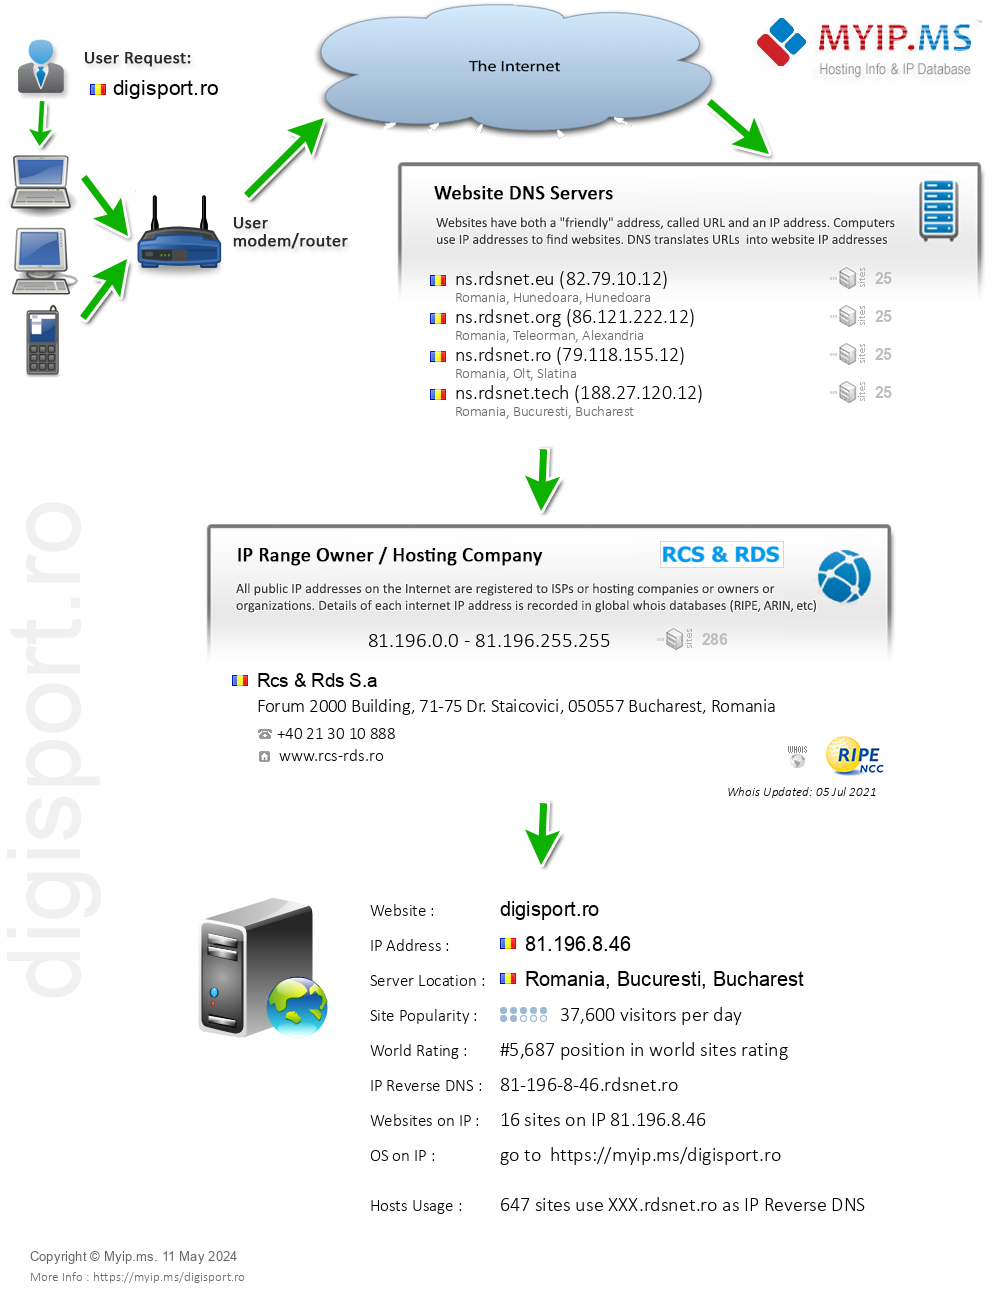 Digisport.ro - Website Hosting Visual IP Diagram